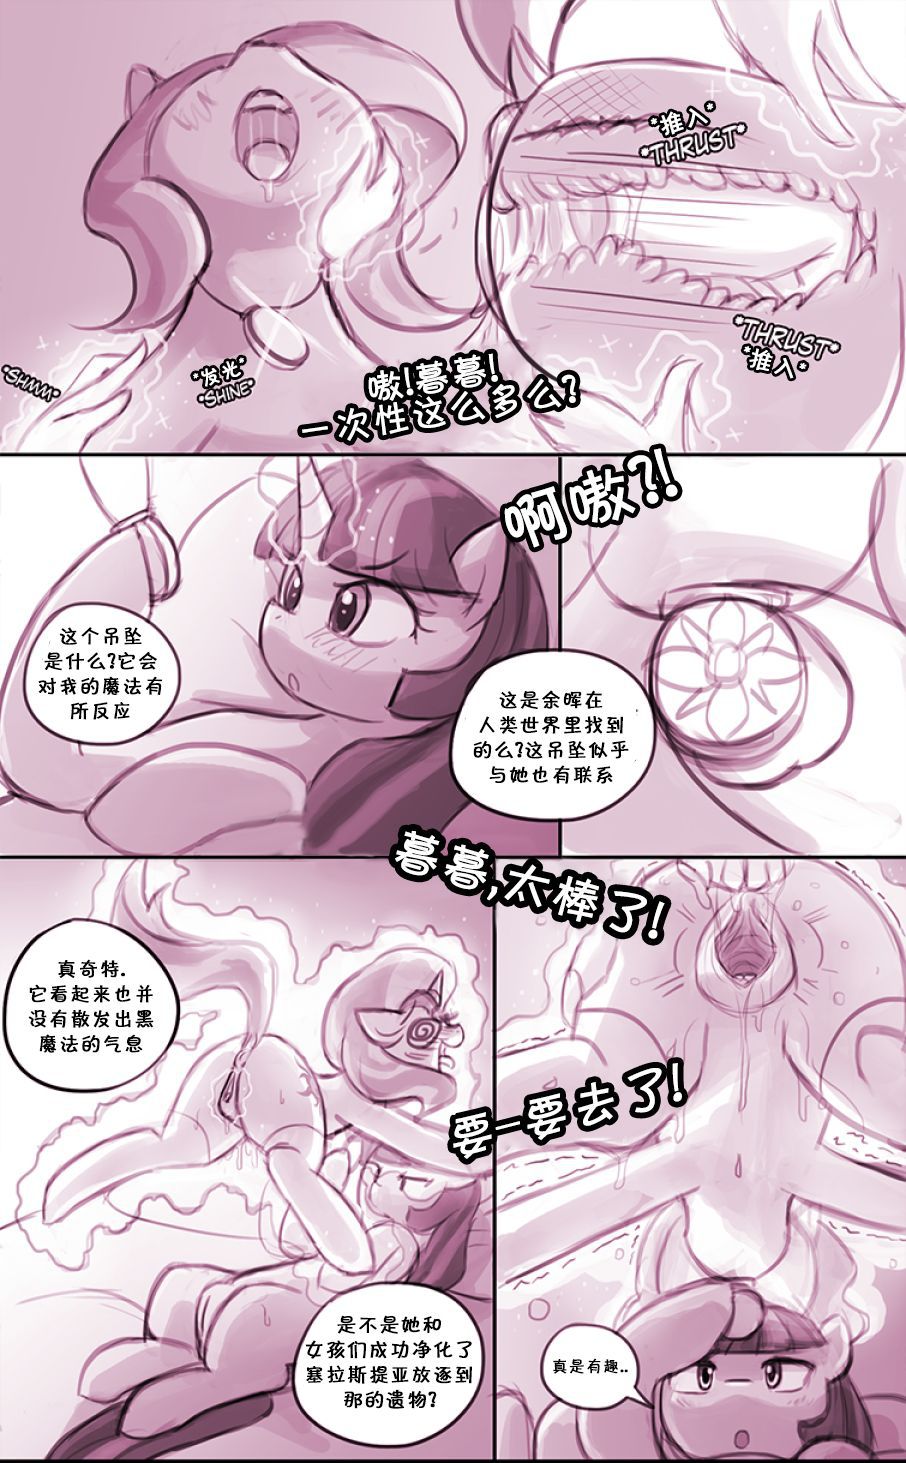 [Lumineko] Homesick | 吾心归处是吾乡 (My Little Pony: Friendship is Magic) [Chinese] [PhoenixTranslation] 【Lumineko】【PhoenixTranslation】Homesick 17